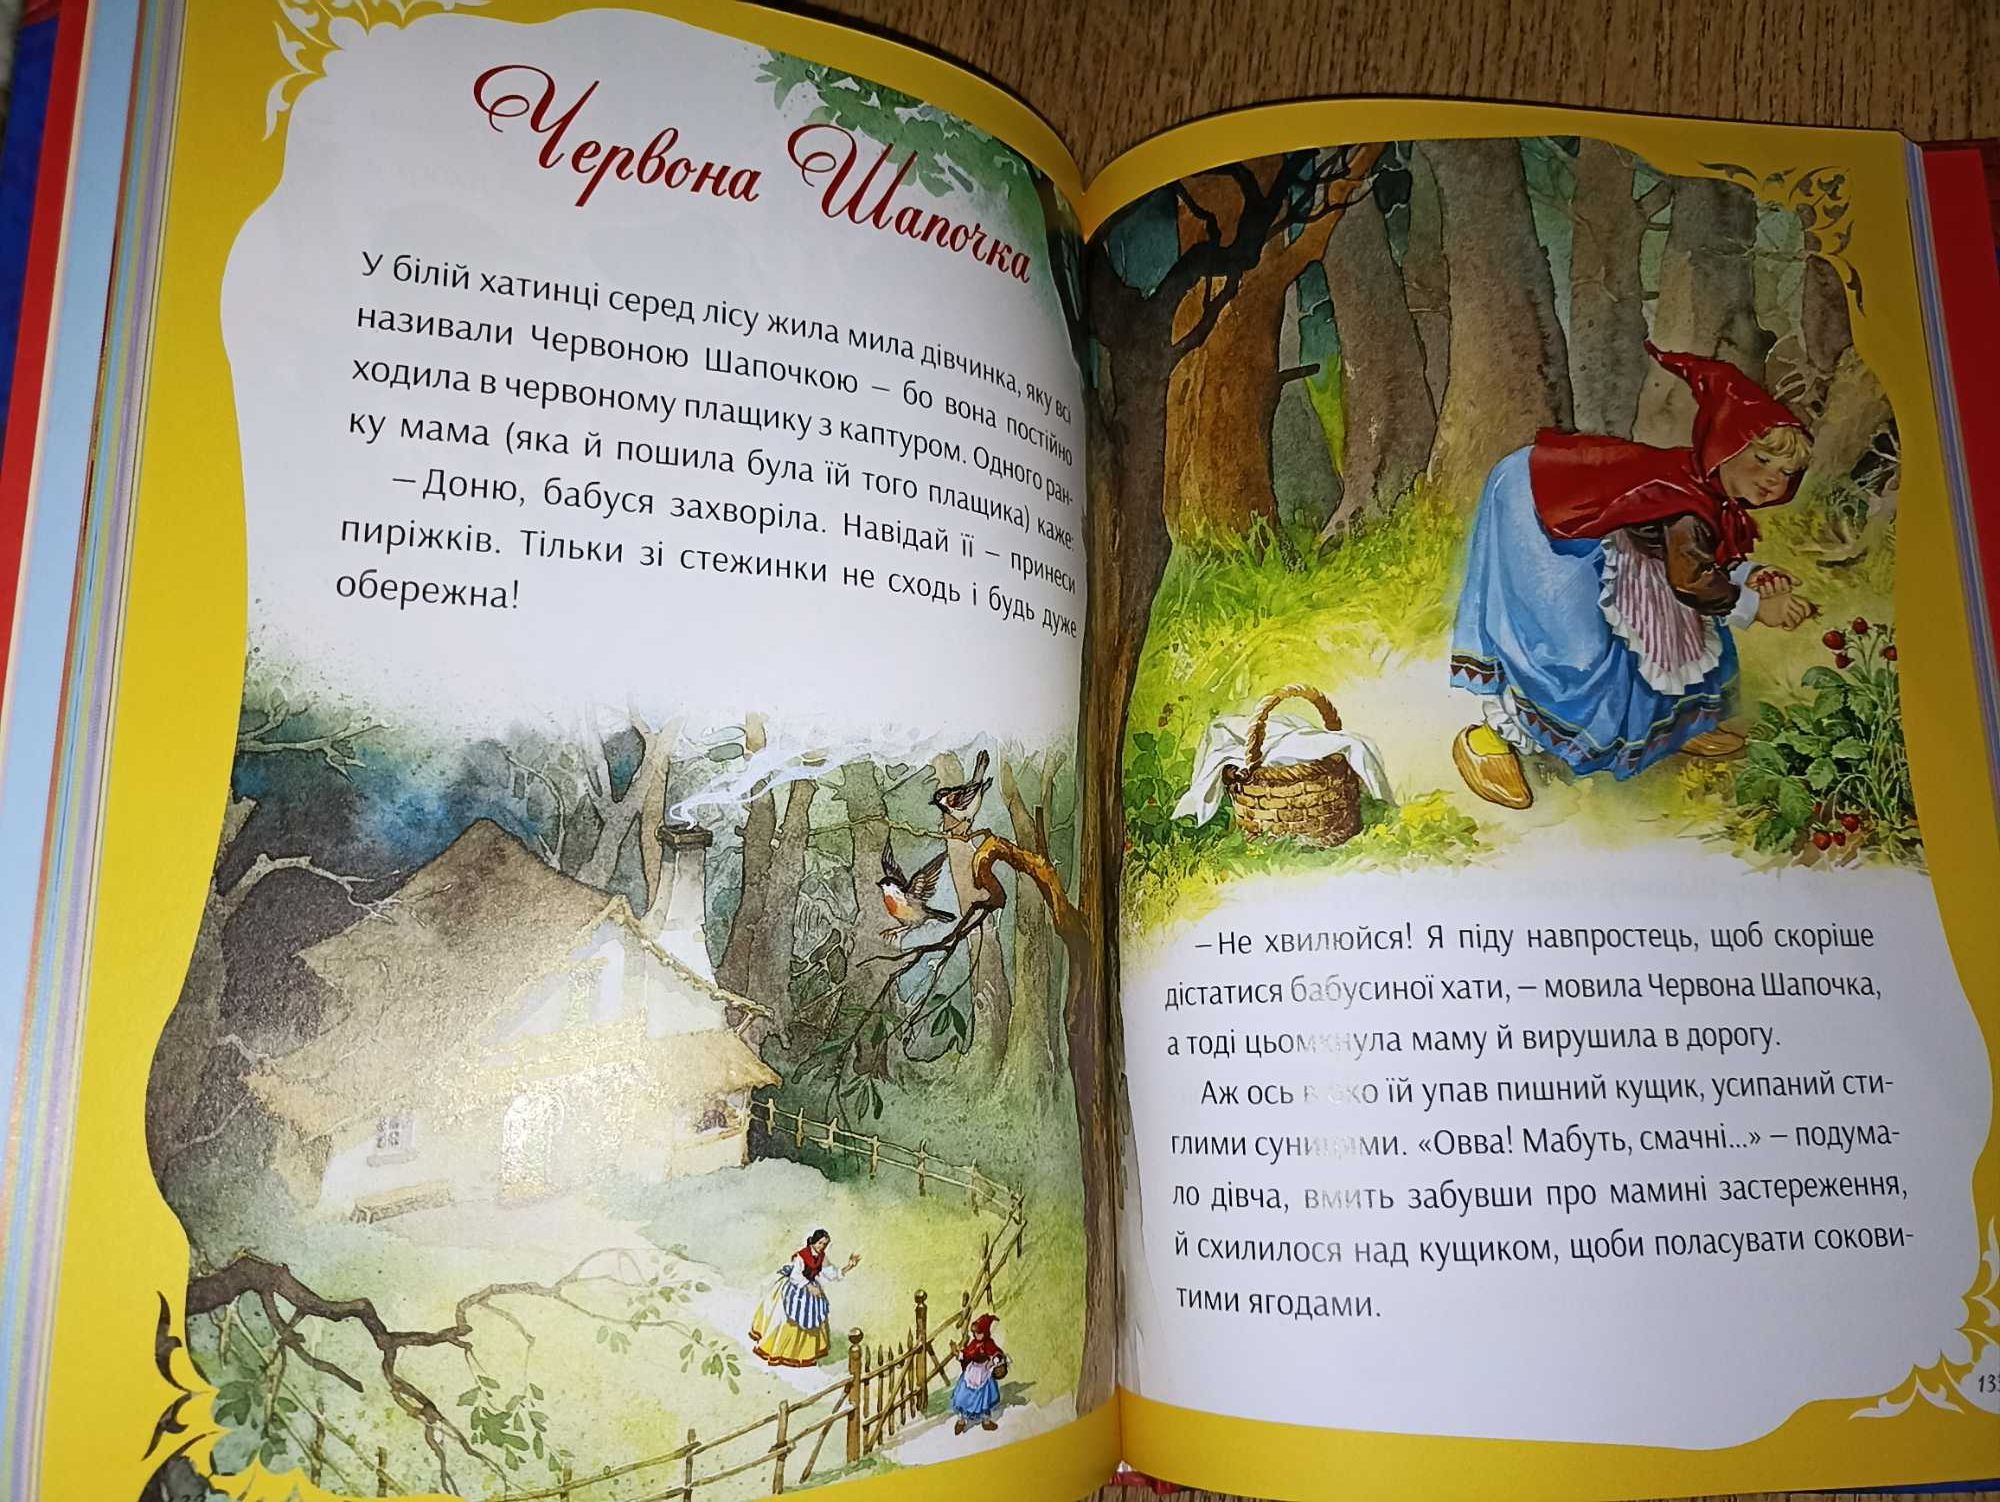 Тони Вульф лучшие сказки малышам 2кн  У світі улюблених чарівних казок